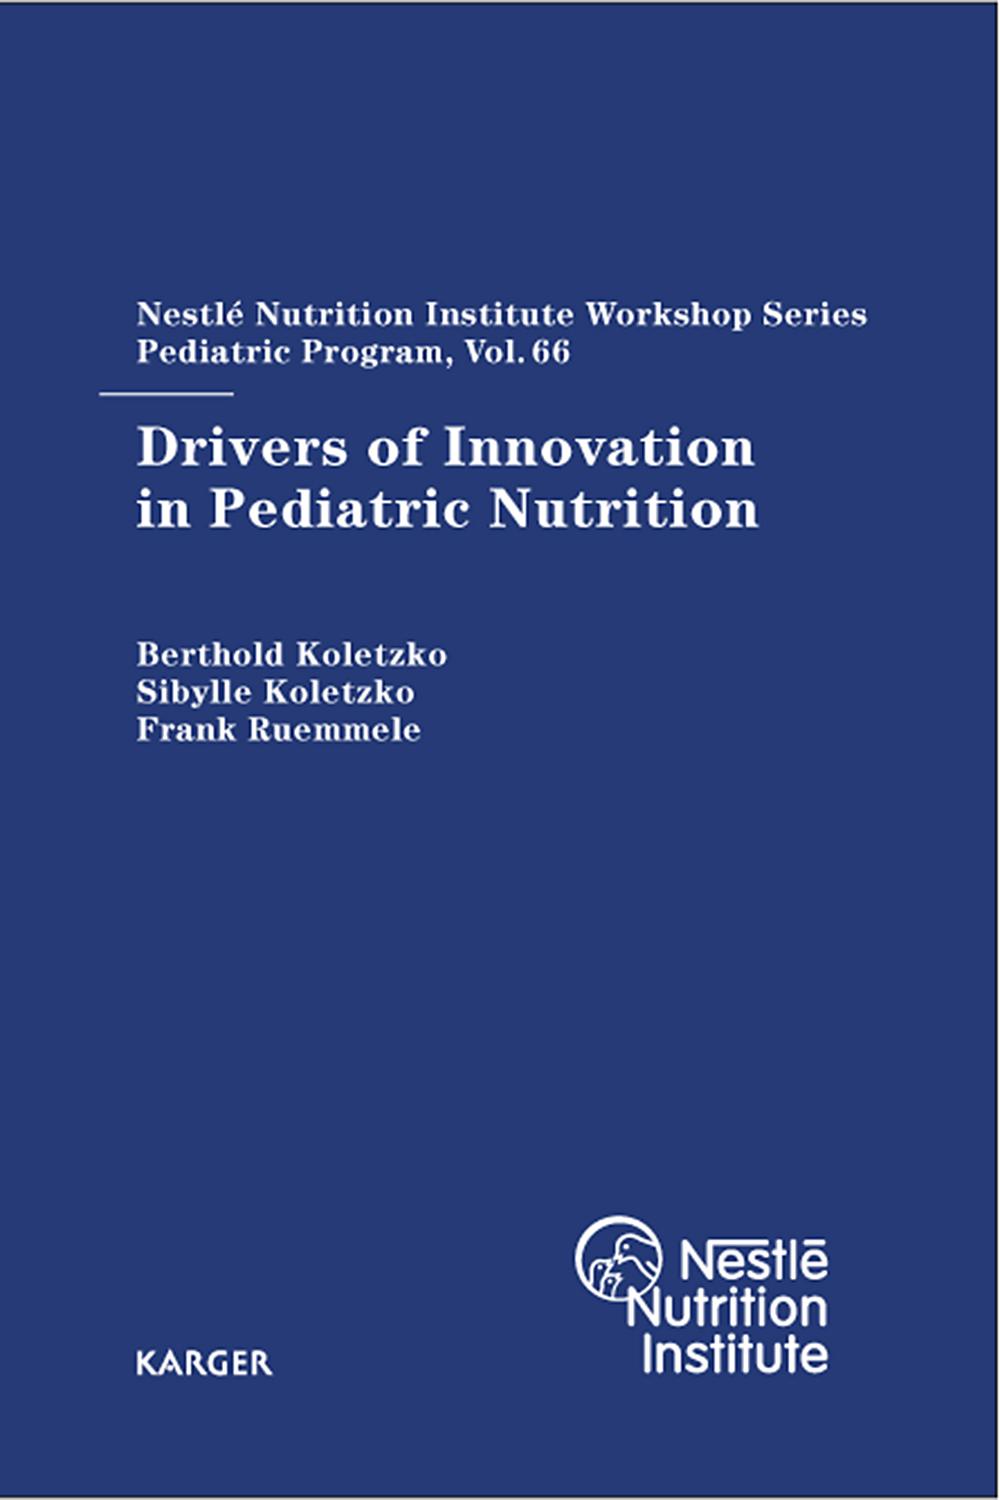 Drivers of Innovation in Pediatric Nutrition - B. Koletzko, F. Ruemmele, S. Koletzko